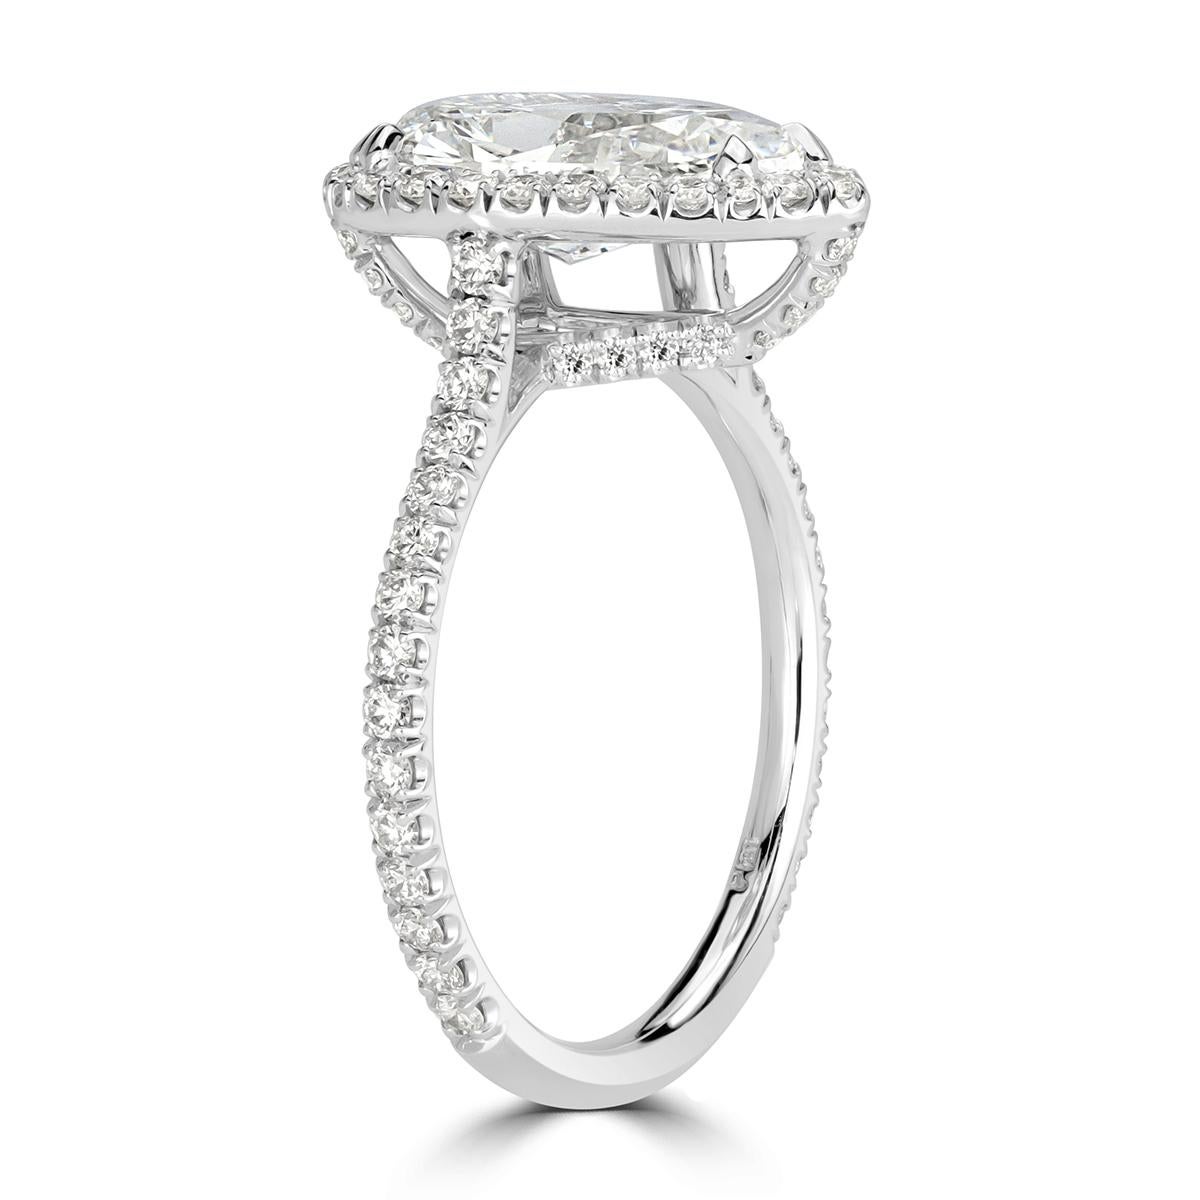 Women's or Men's Mark Broumand 3.12 Carat Pear Shaped Diamond Engagement Ring